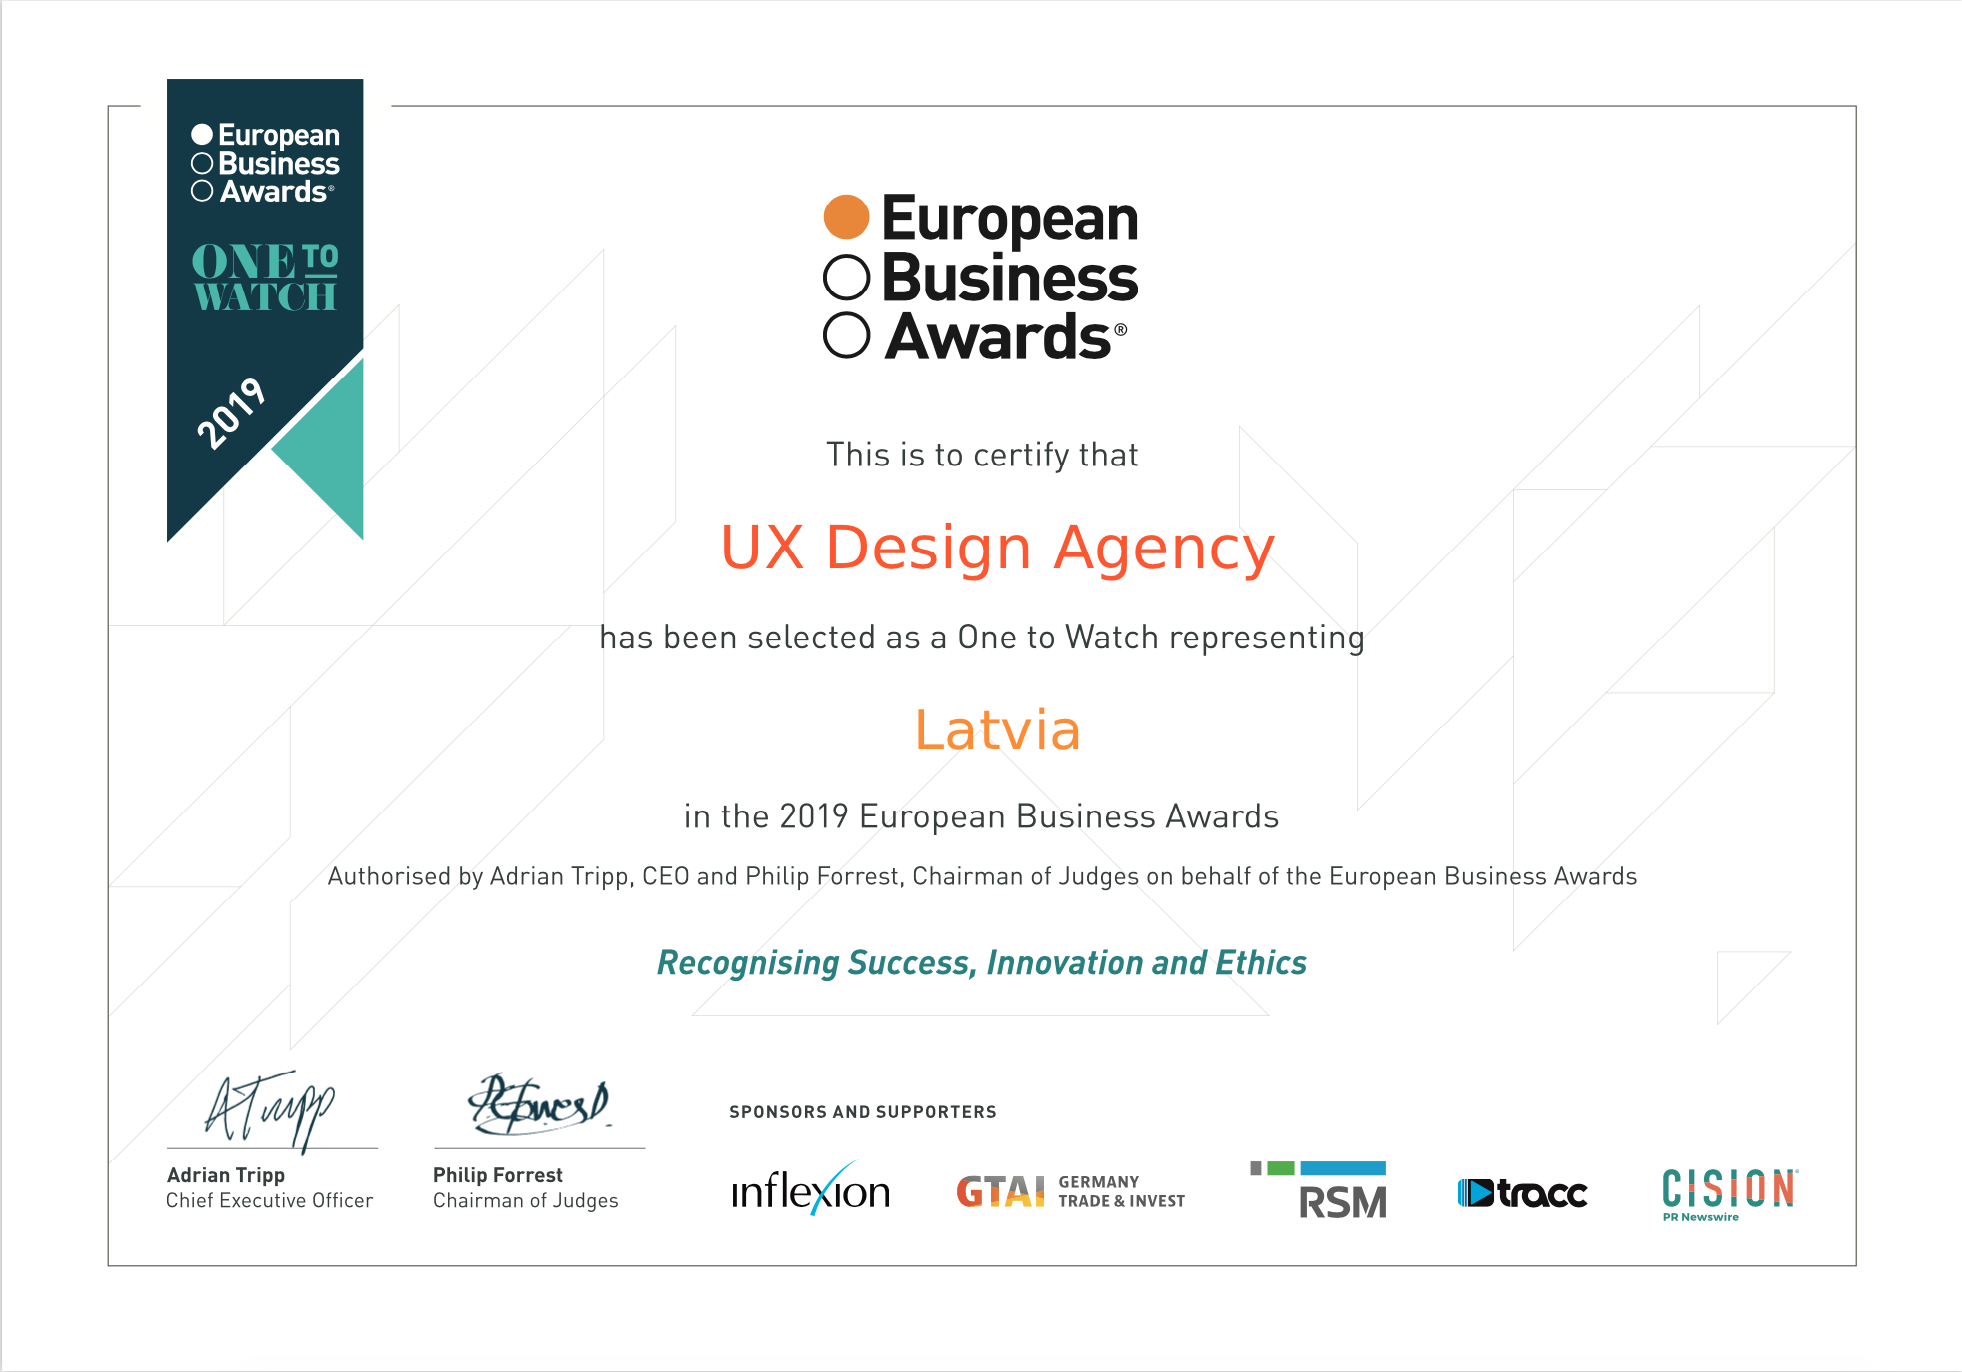 uxda-awarded-european-business-award